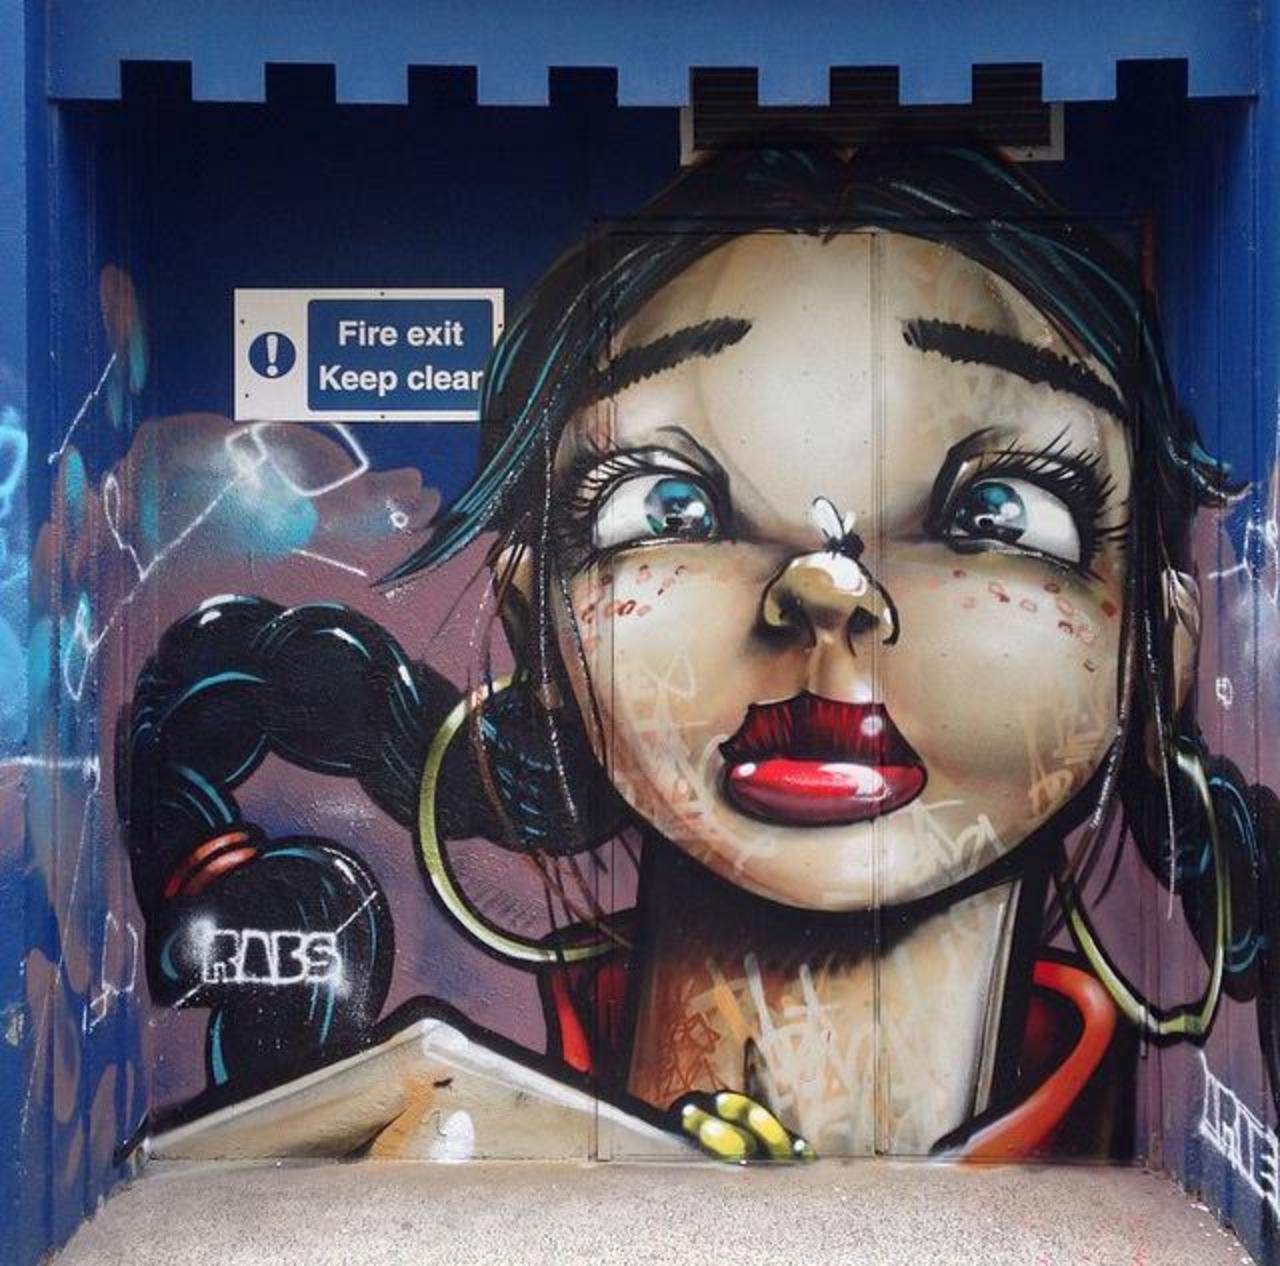 New Street Art piece by • aroe_msk 

#art #arte #graffiti #streetart http://t.co/KNktdVsvH3